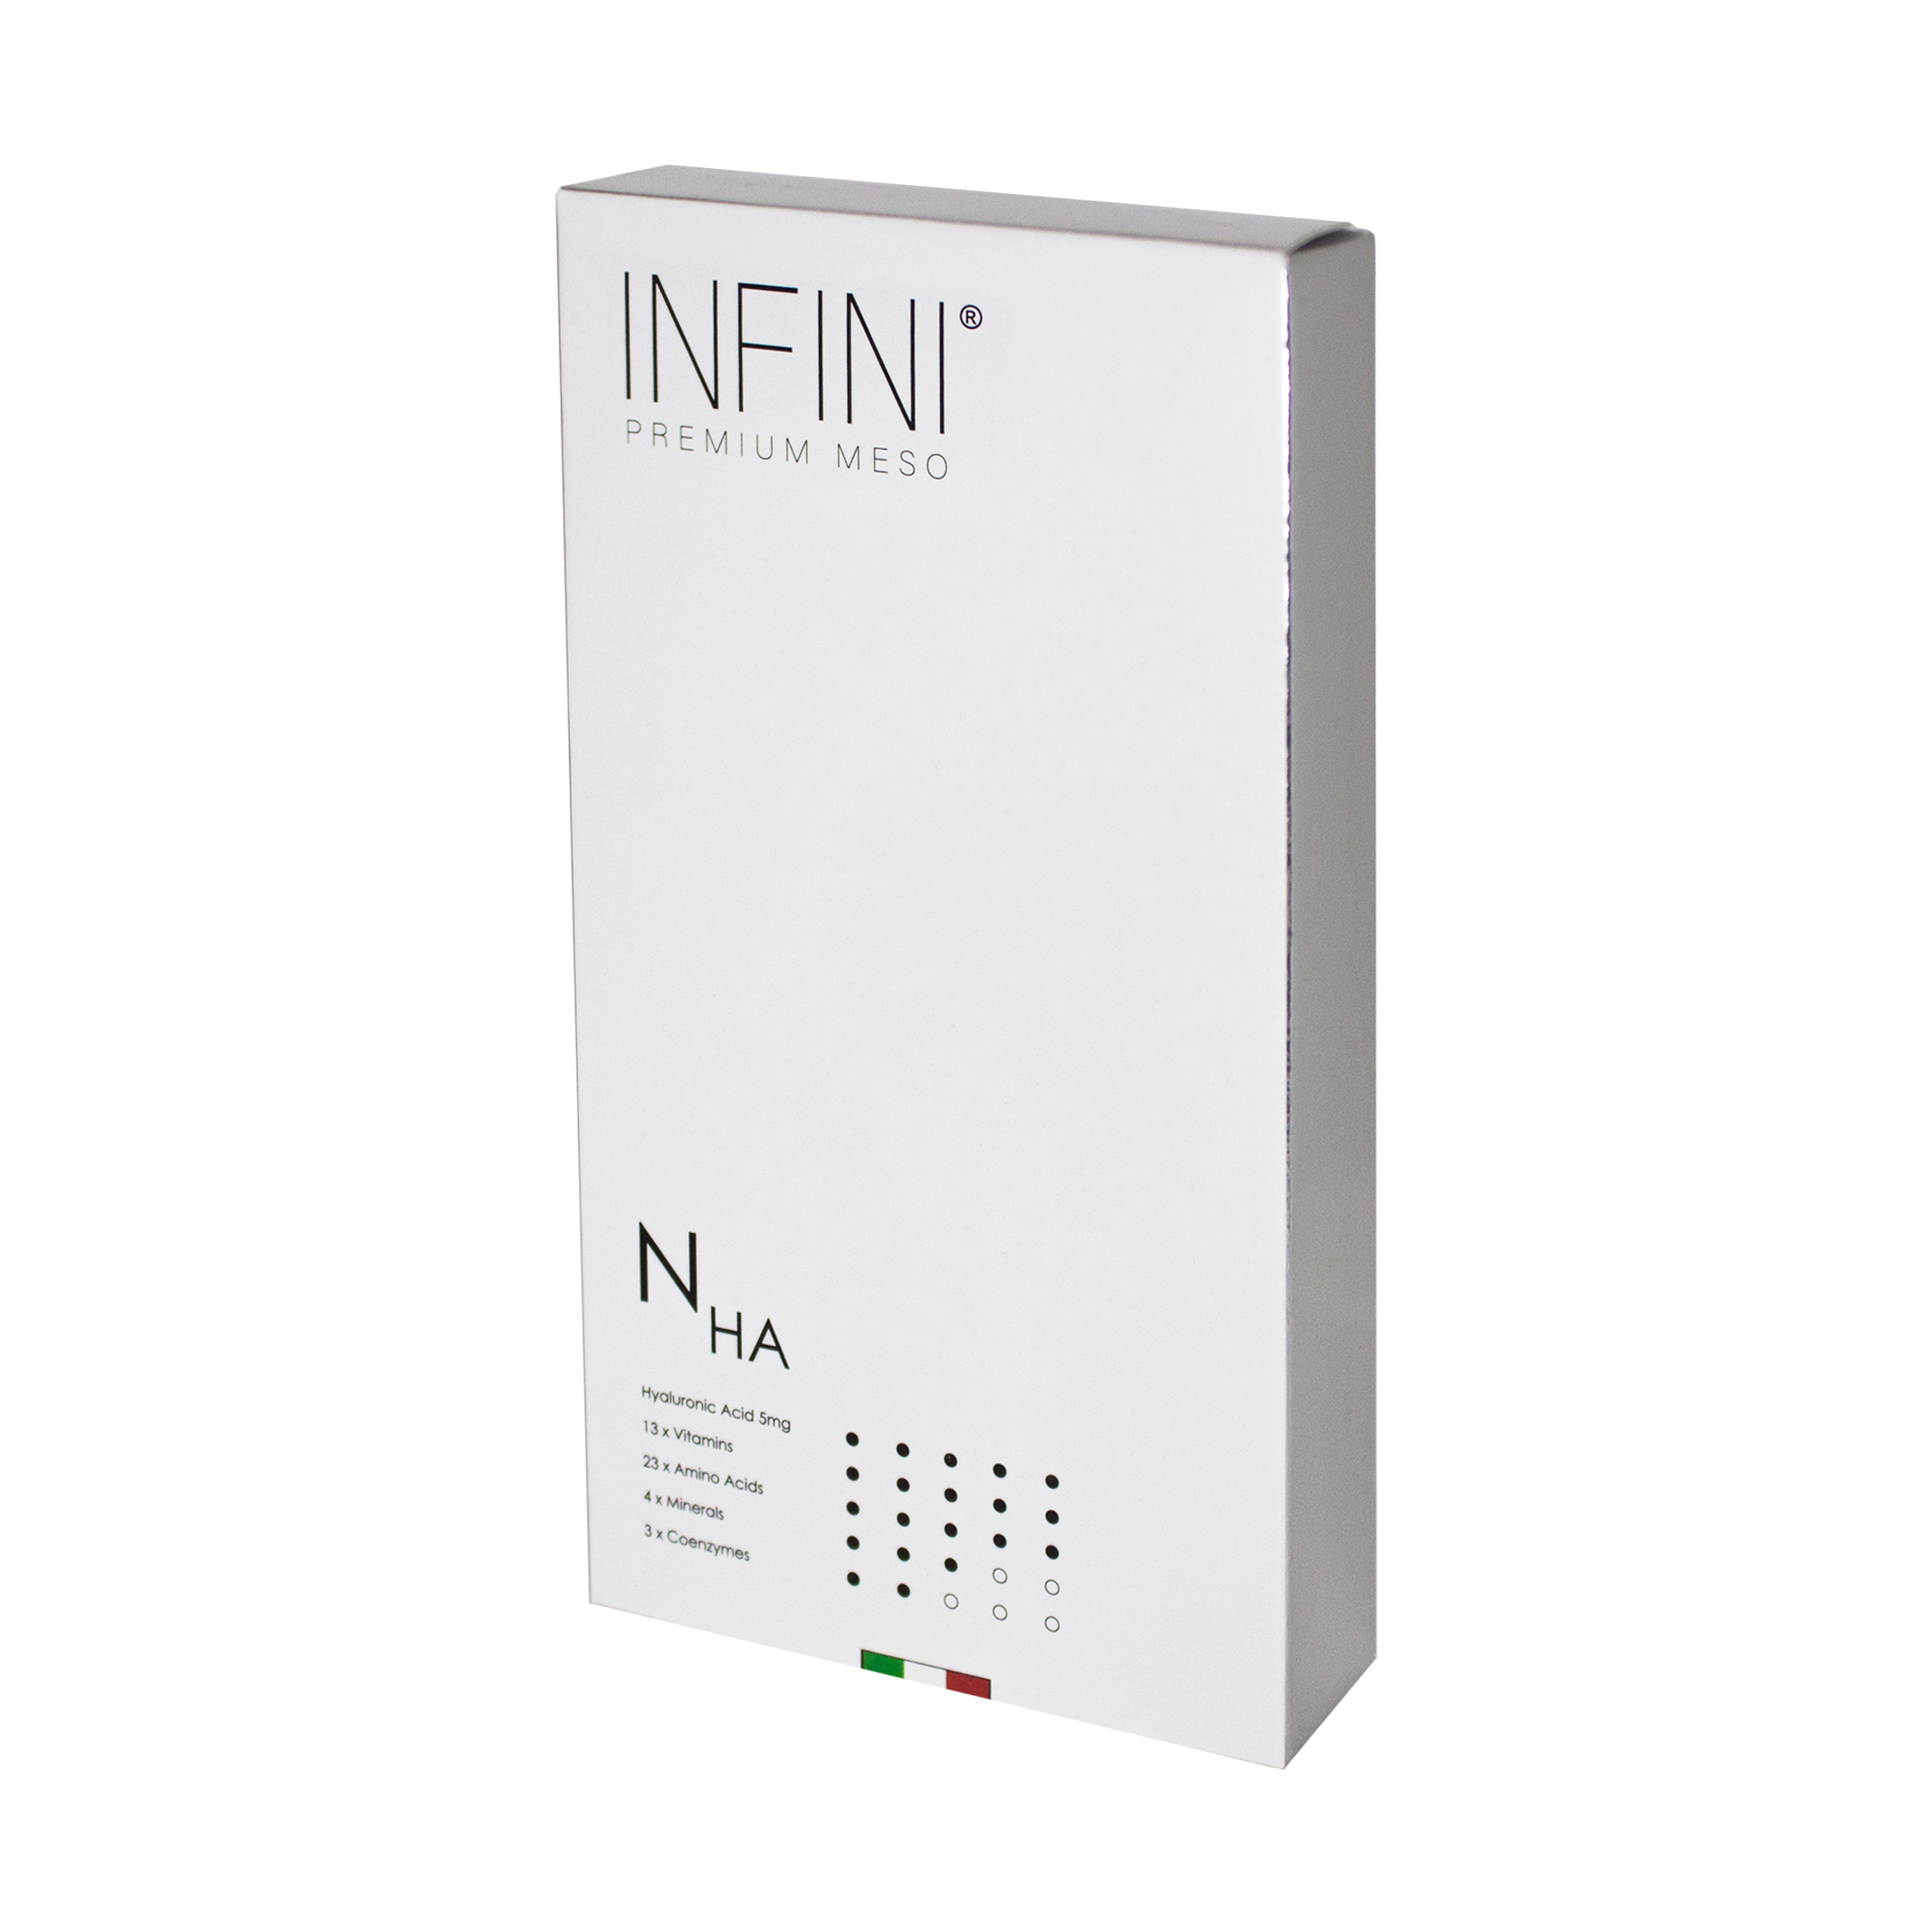 Infini Premium Meso NHA side